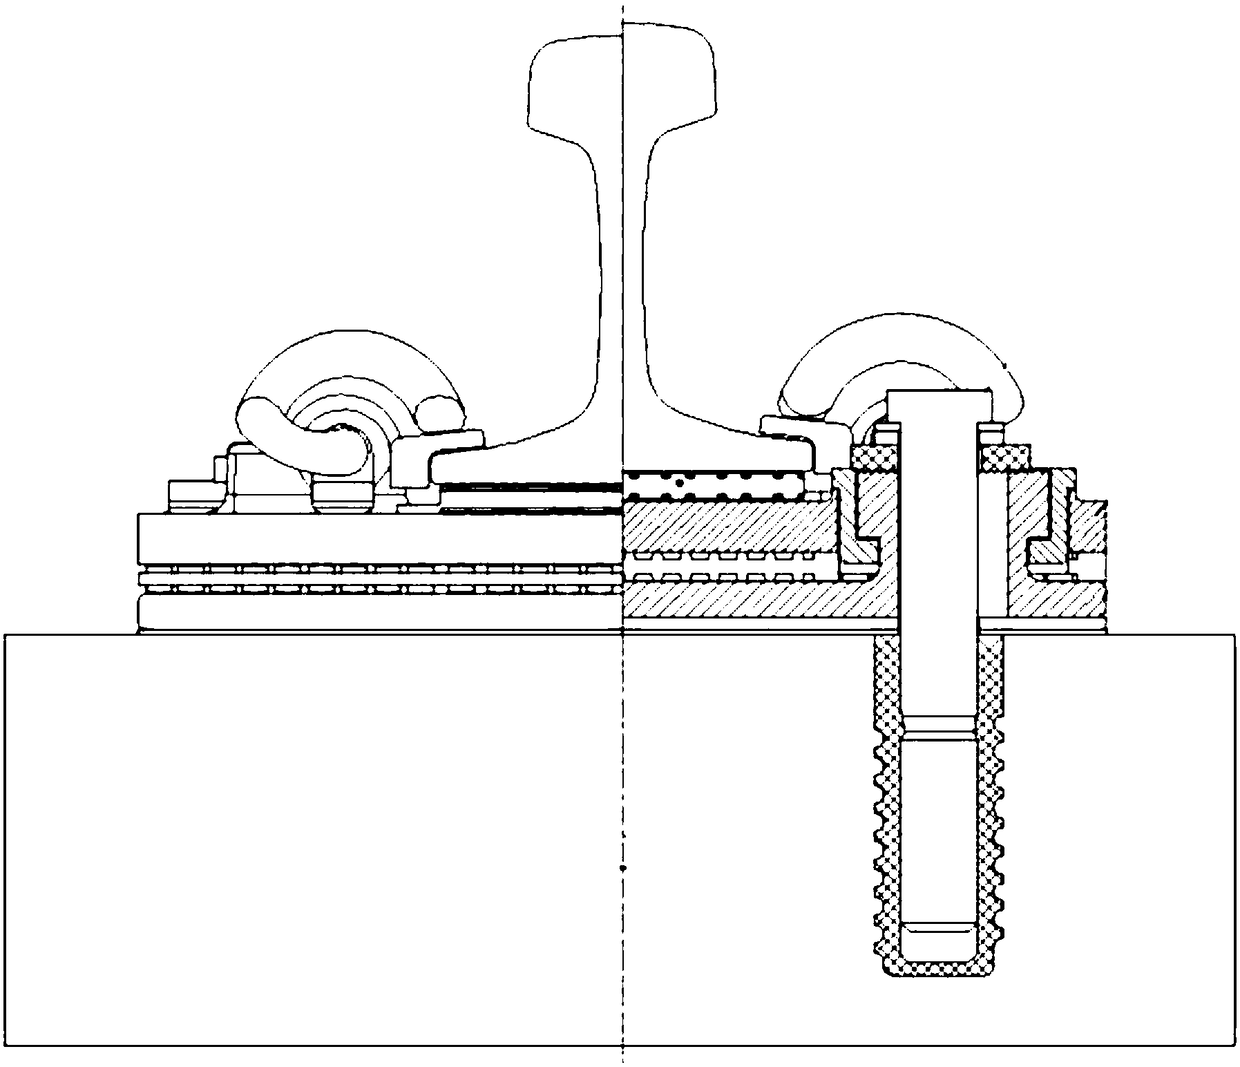 Vibration-reduction fastener system